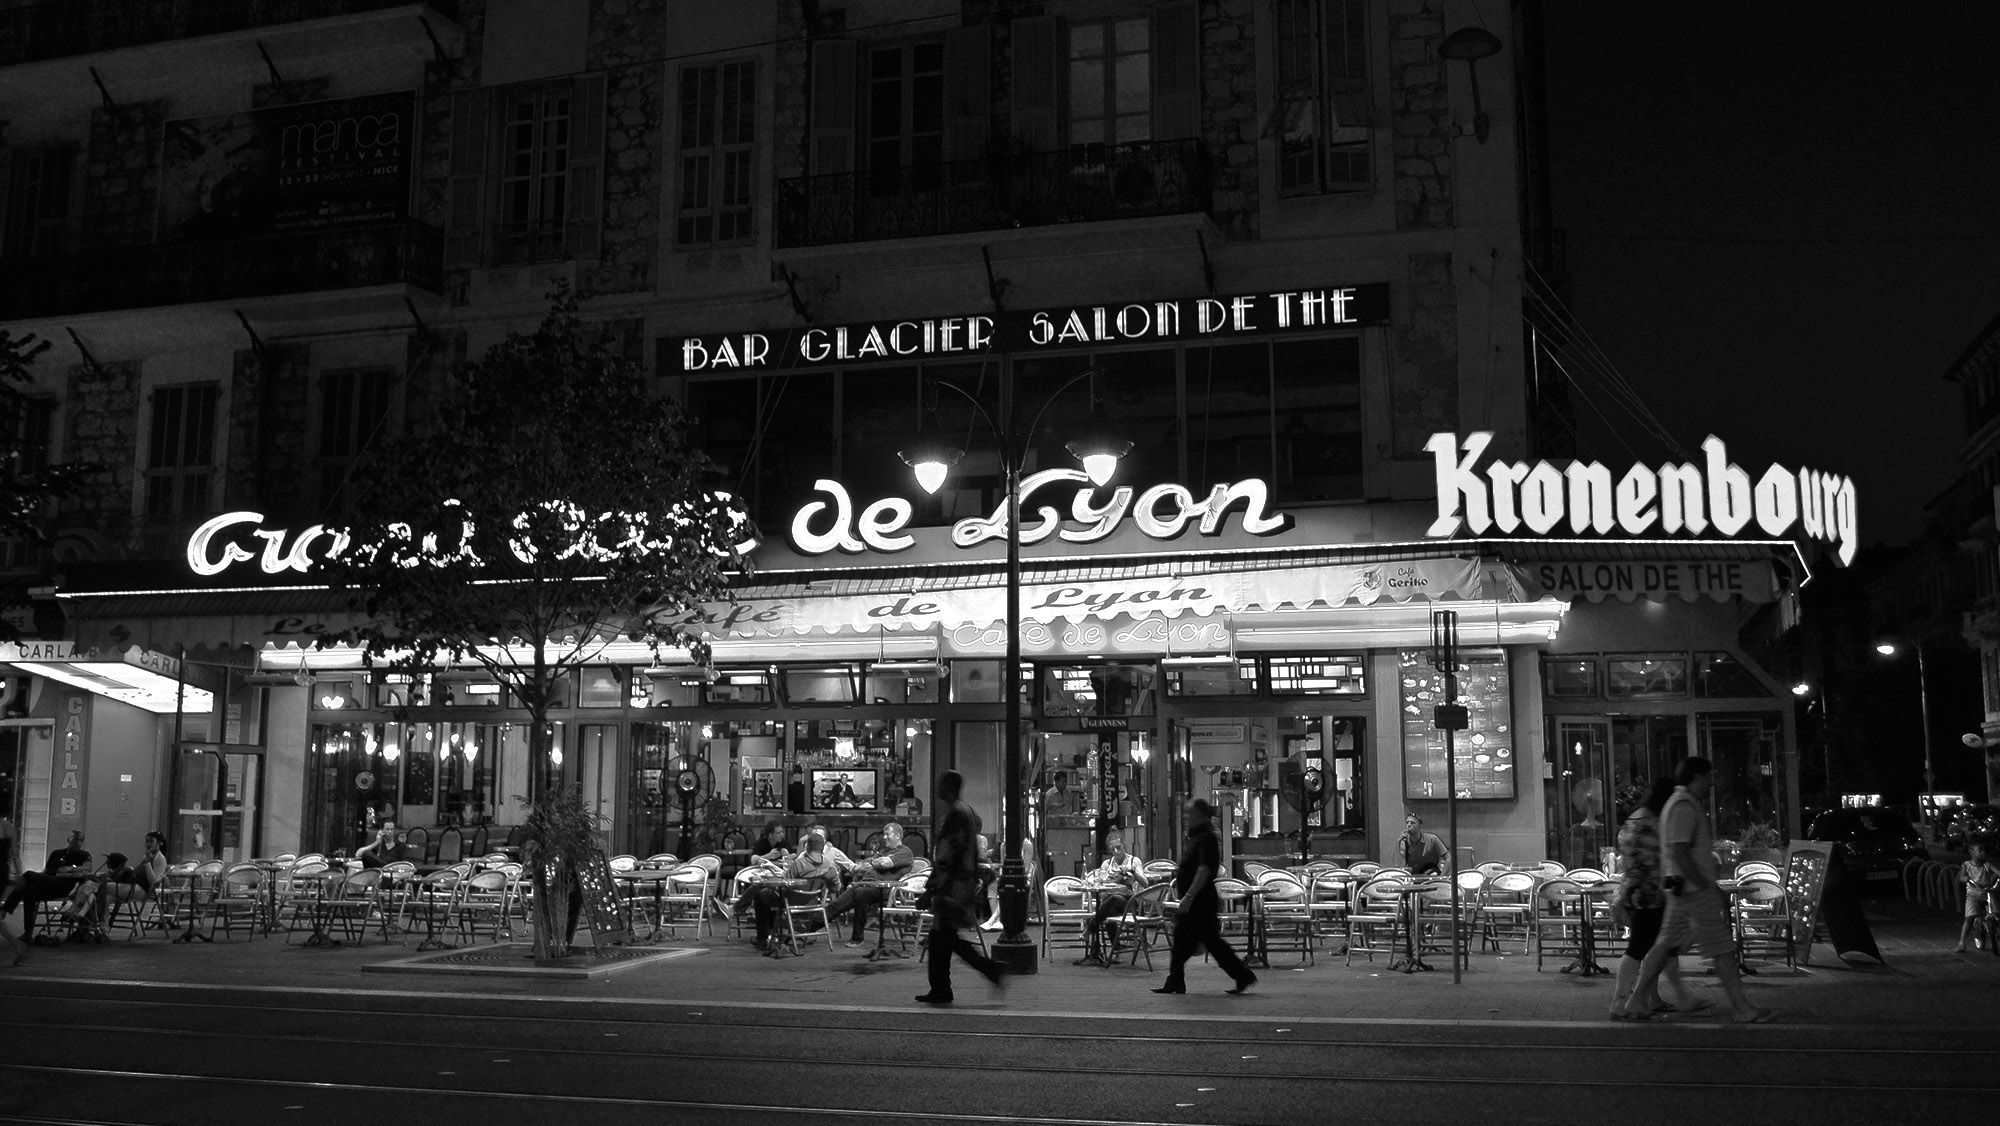 Grand Cafe de Lyon, Nice, France